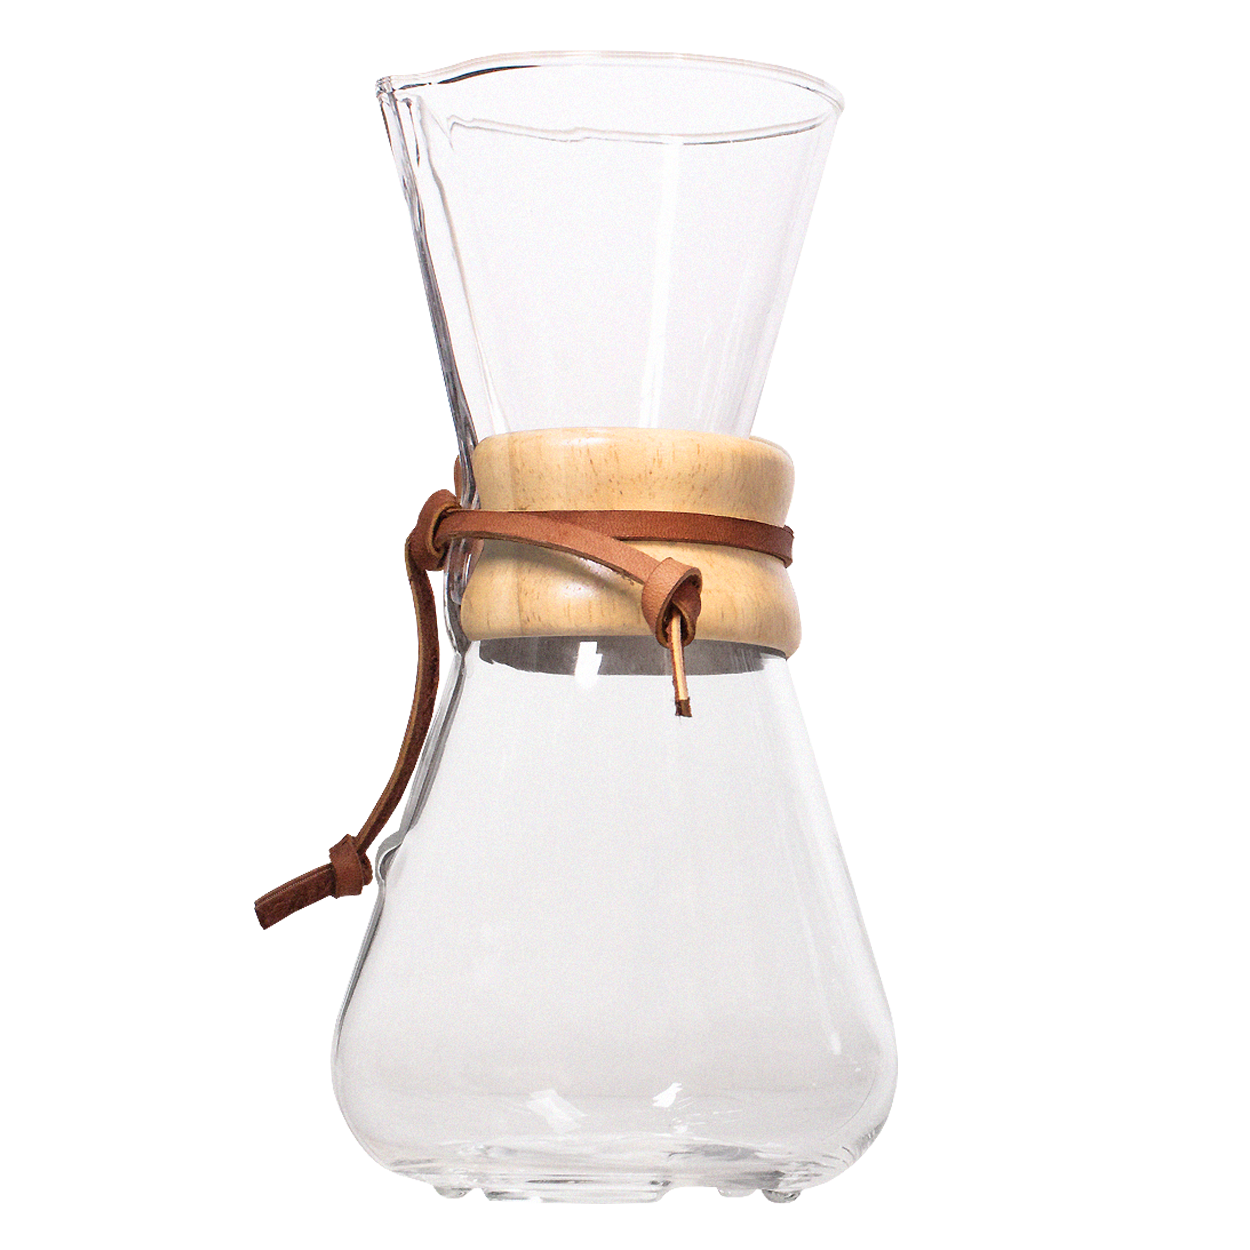 Chemex 3-Cup Coffee Maker – Grand Coffee SF